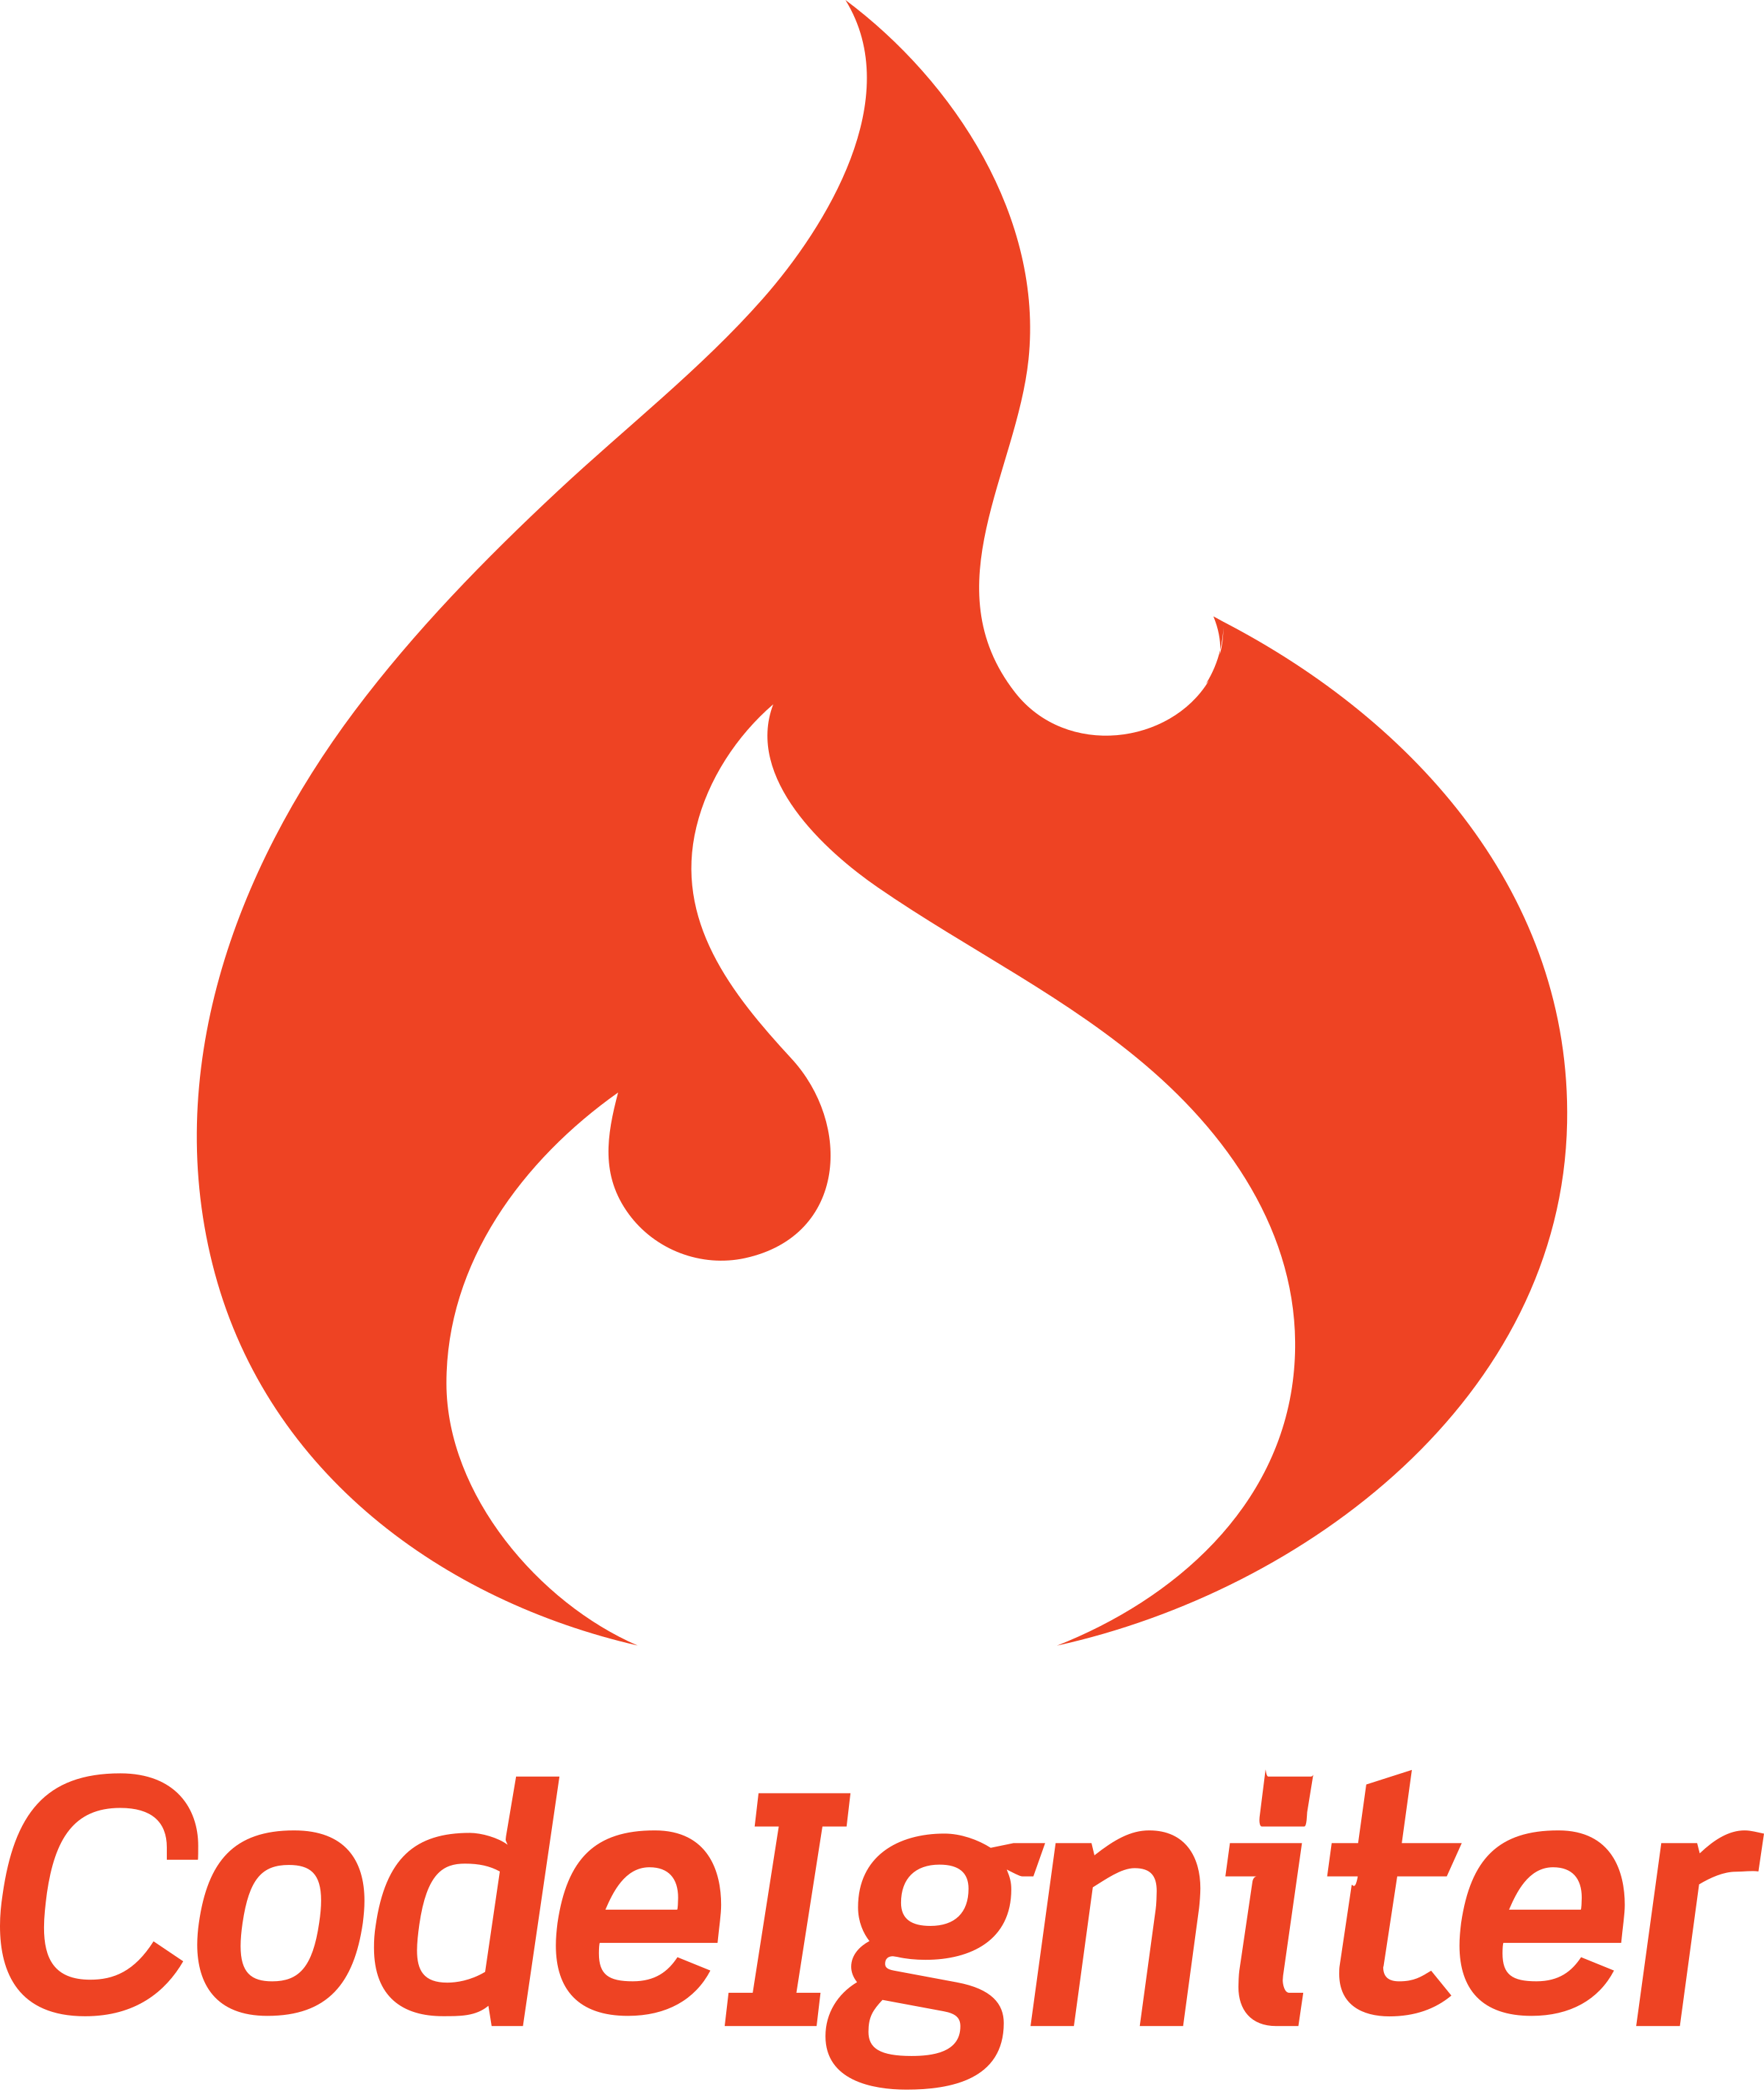 code-igniter logo